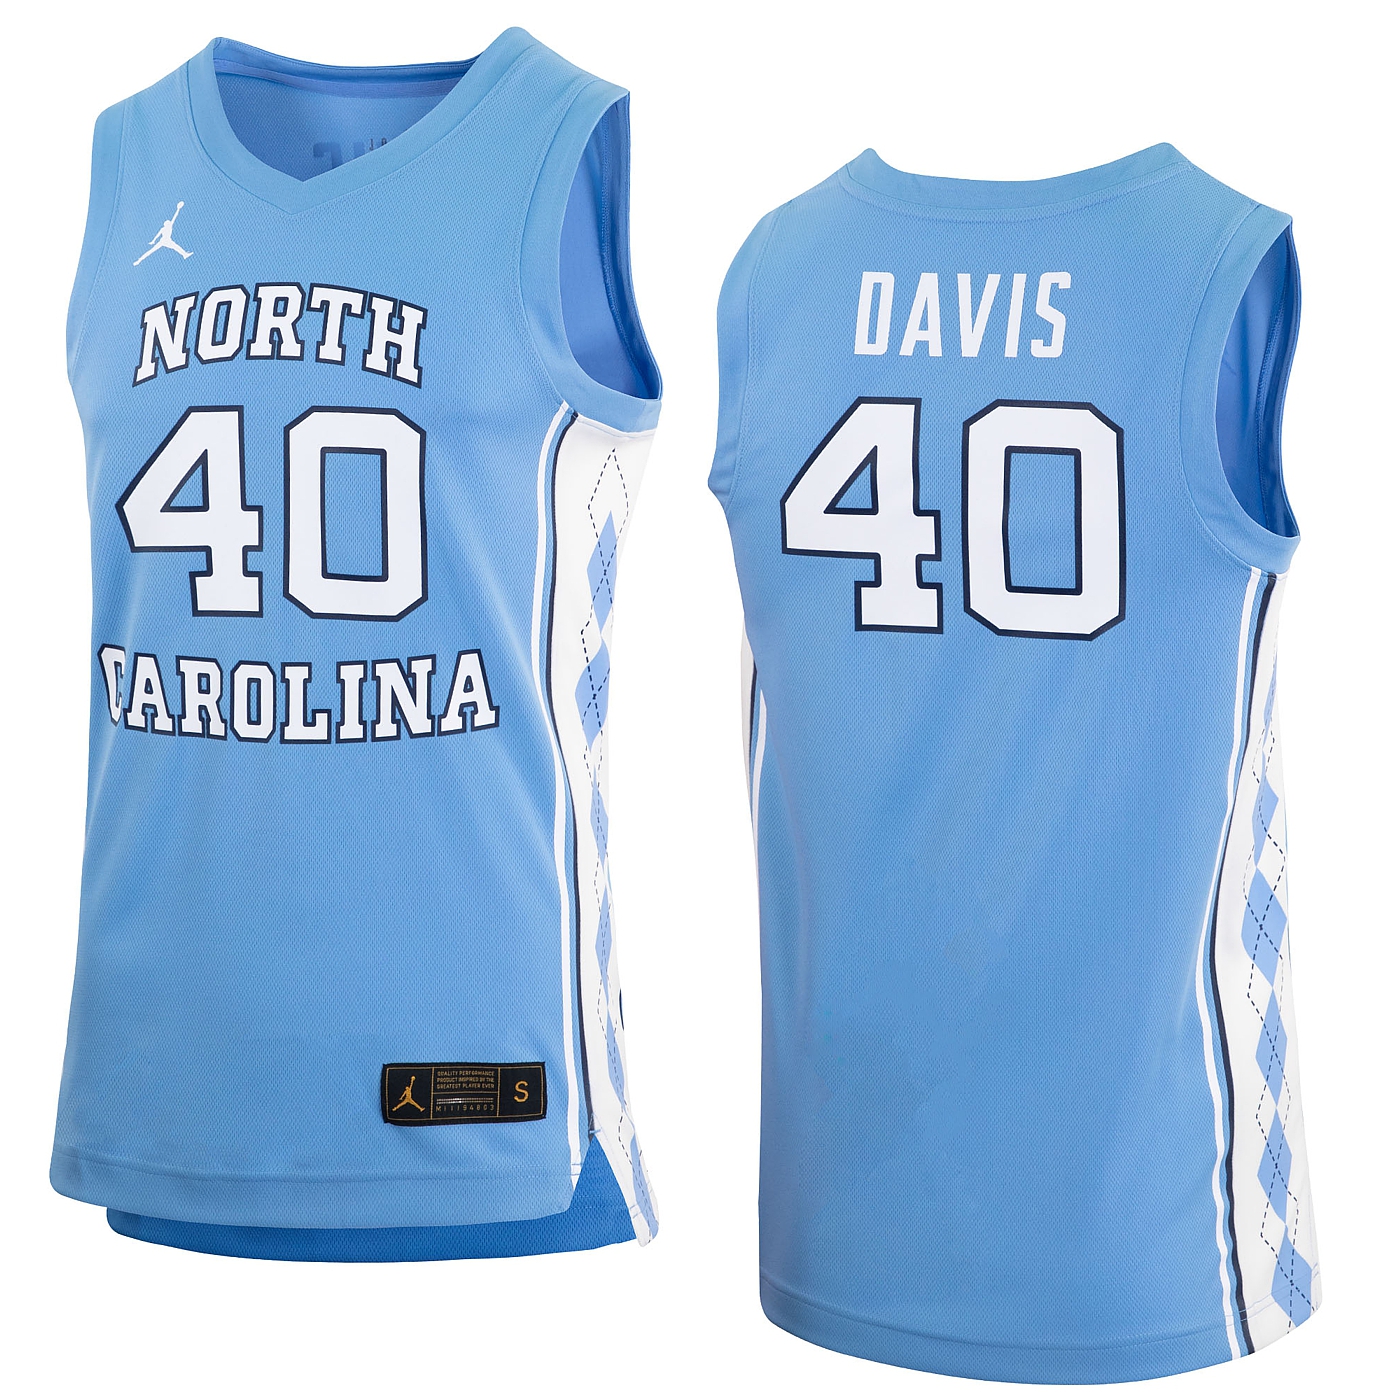 Men's Jordan Brand Hubert Davis #40 Carolina Blue North Carolina